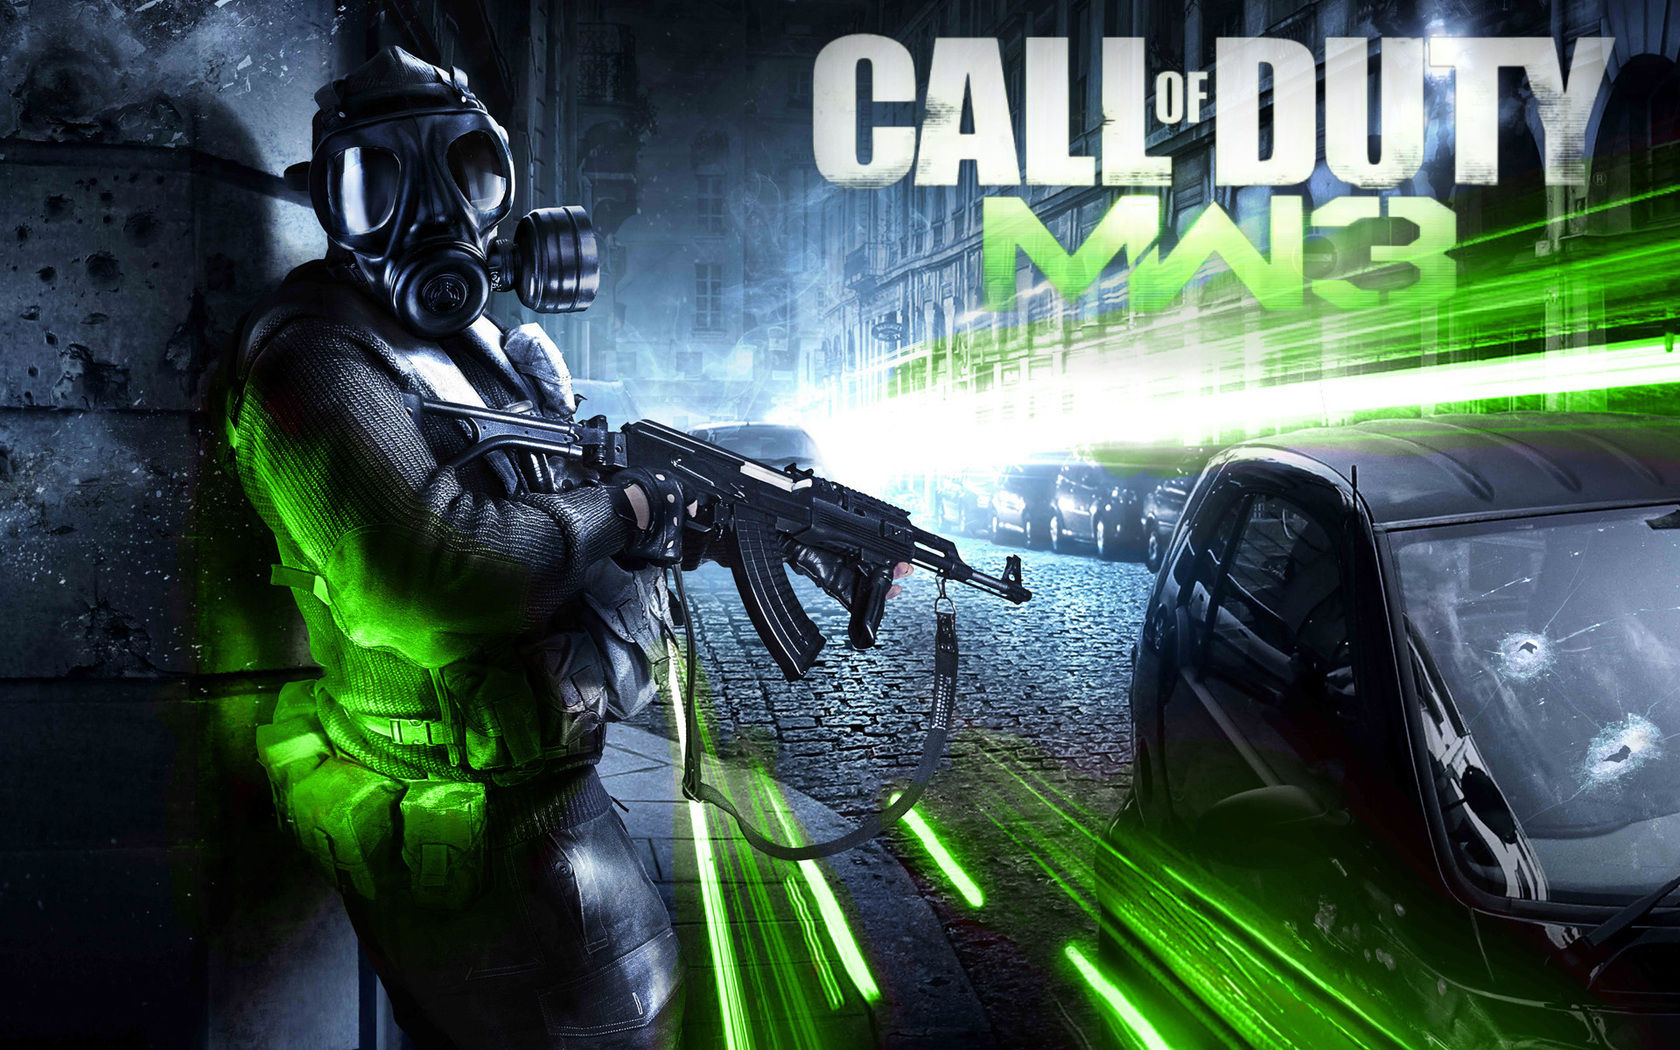 Of Duty Modern Warfare Screen HD Wallpaper Games Ixaa92ft